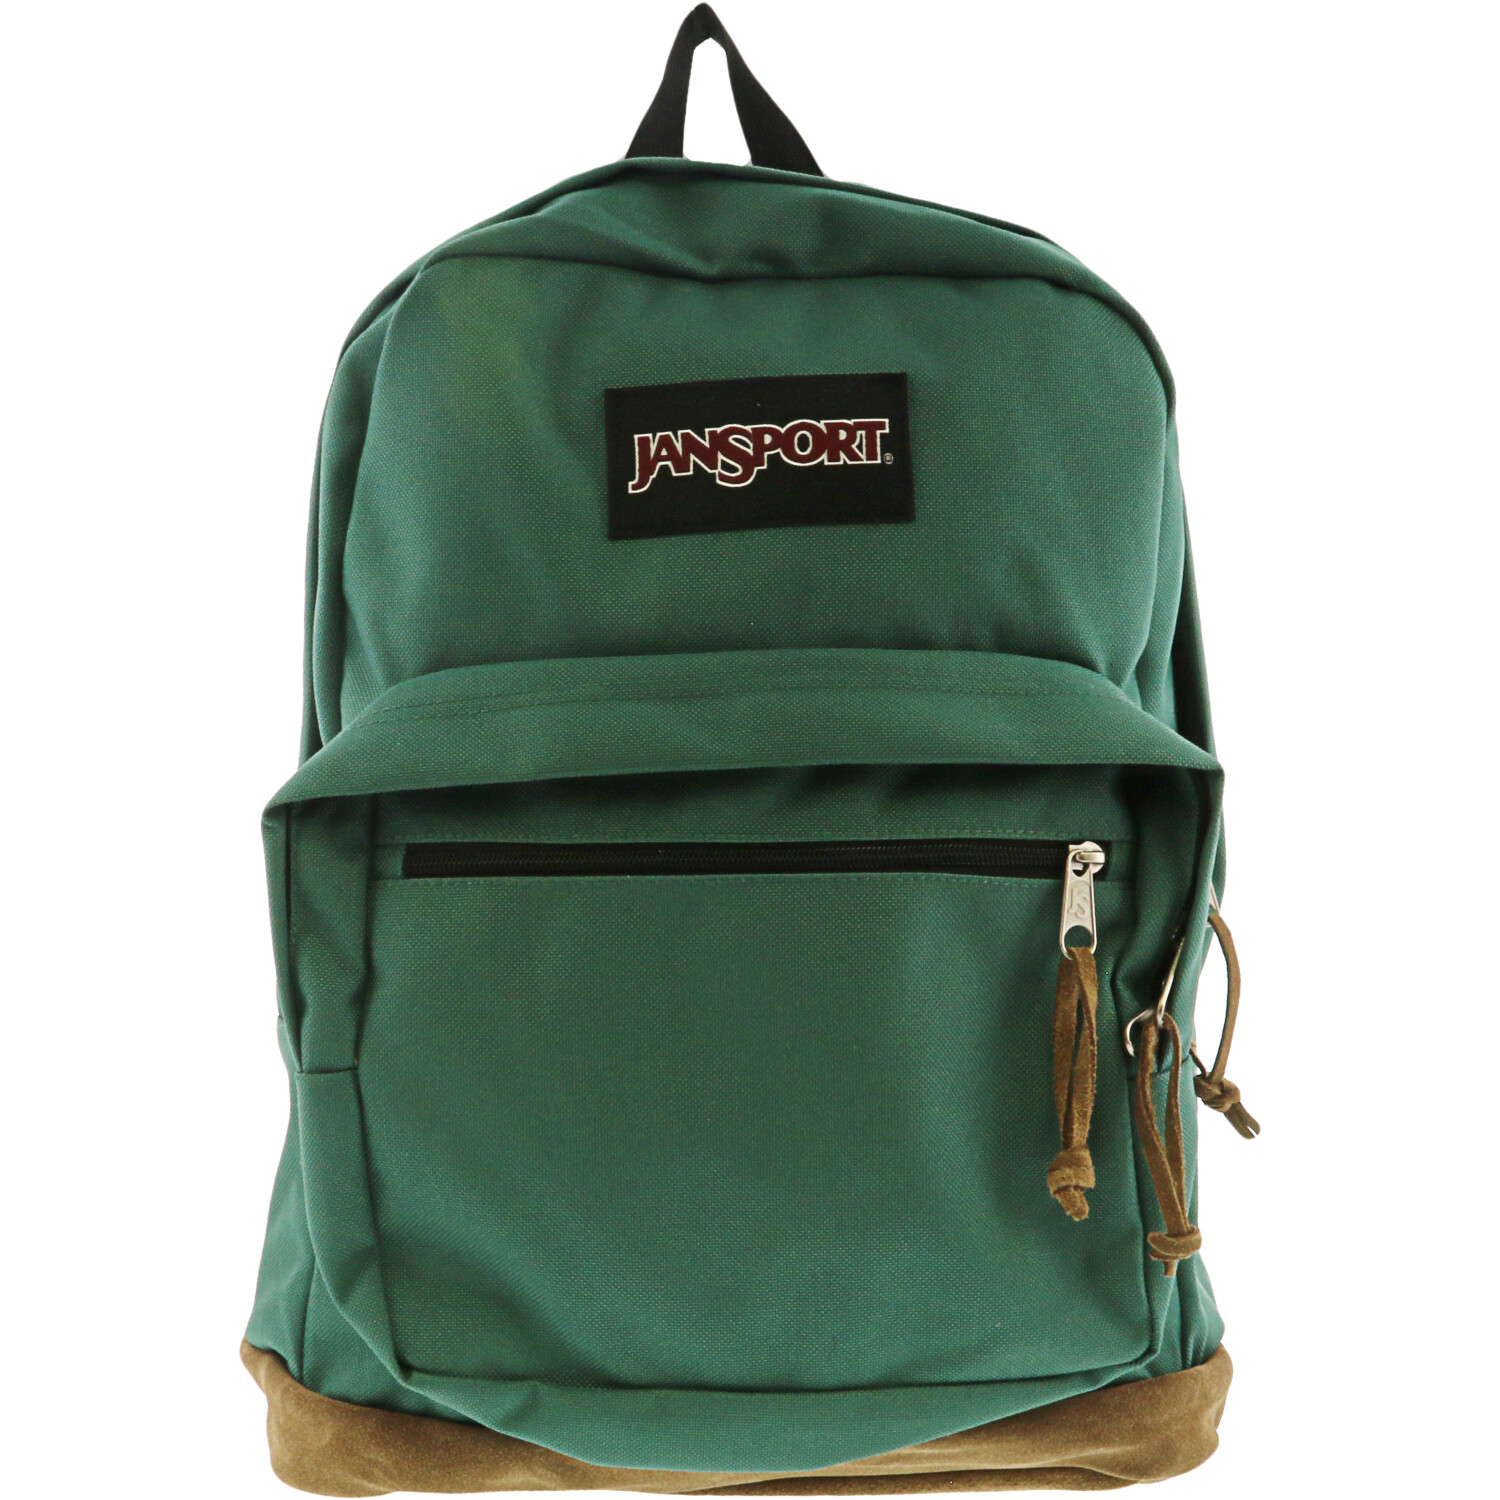 Jansport Men's Right Pack Polyester Backpack - Blue Spruce Green - image 1 of 3